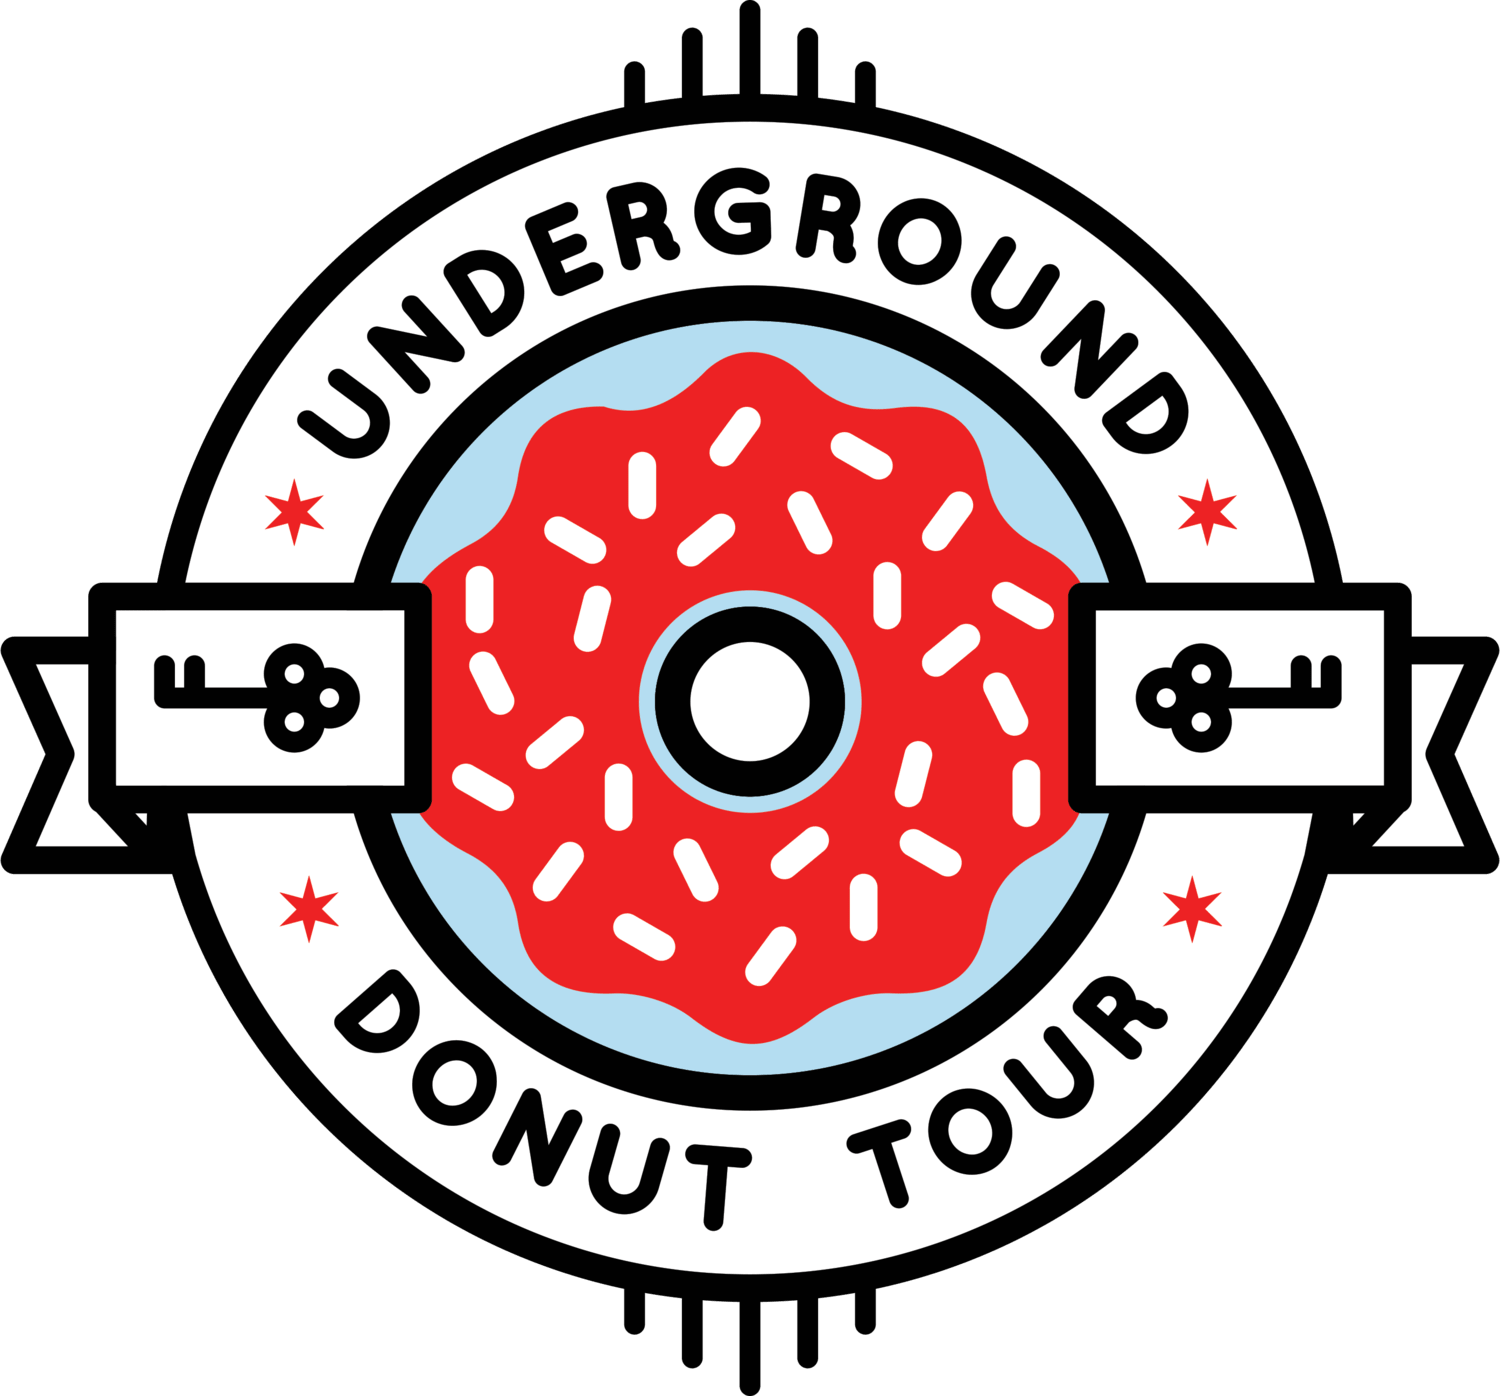 seattle donut tour